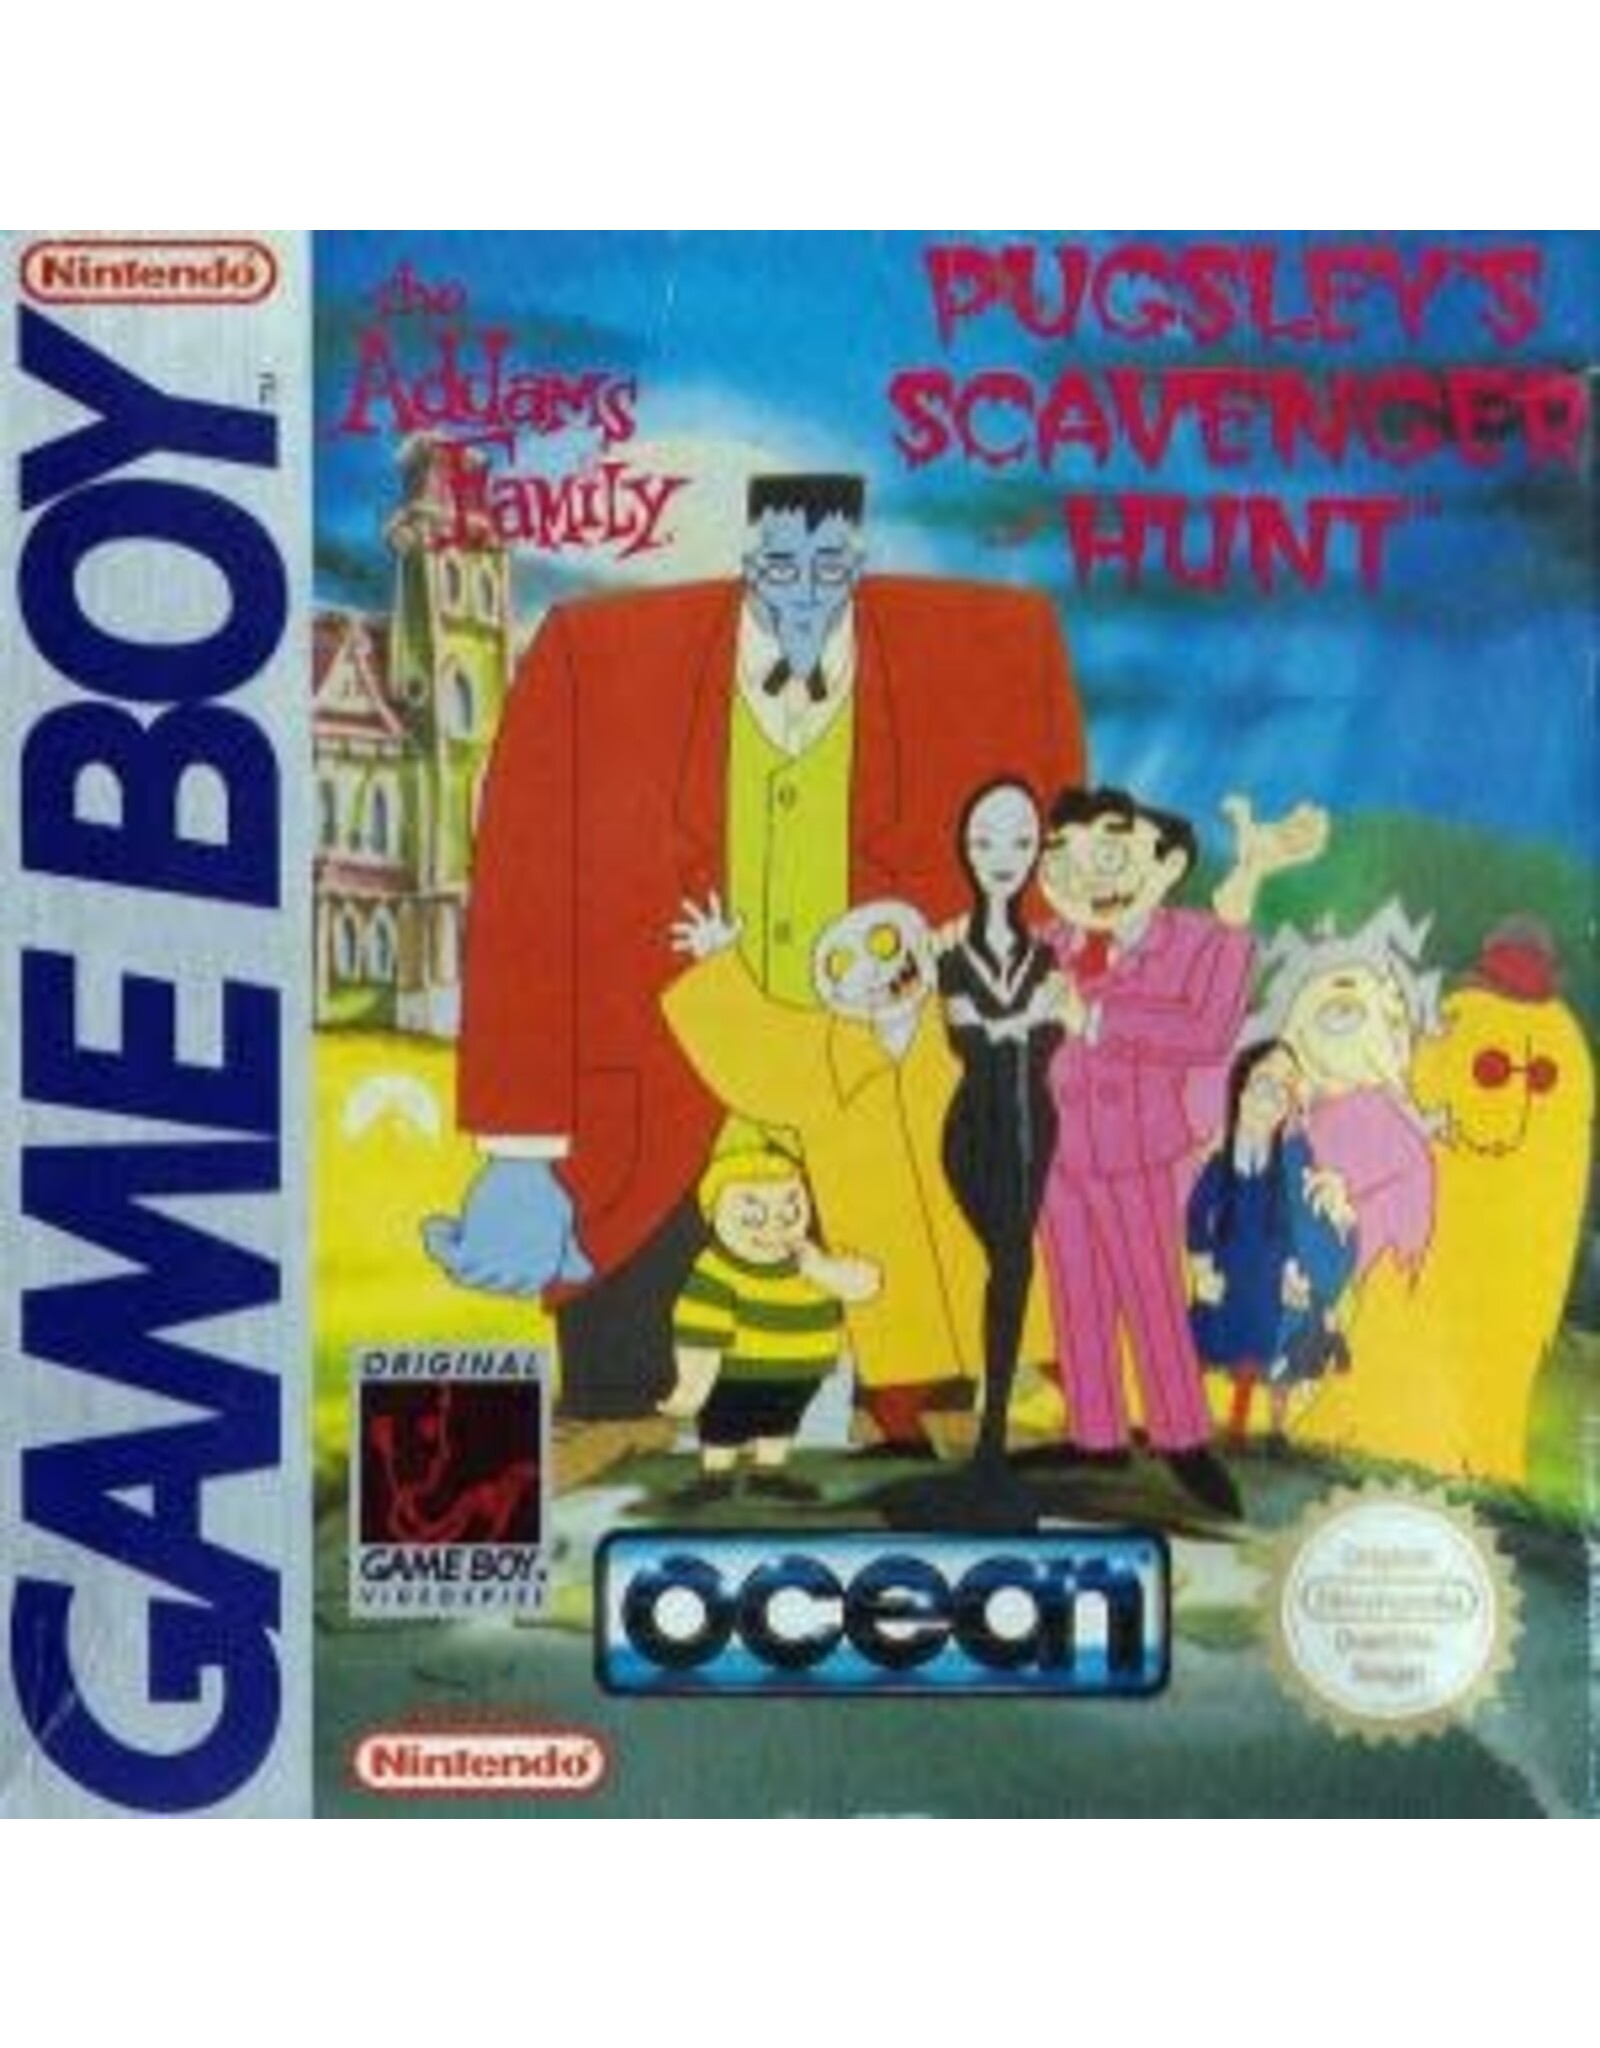 Game Boy Addams Family Pugsley's Scavenger Hunt (CiB)